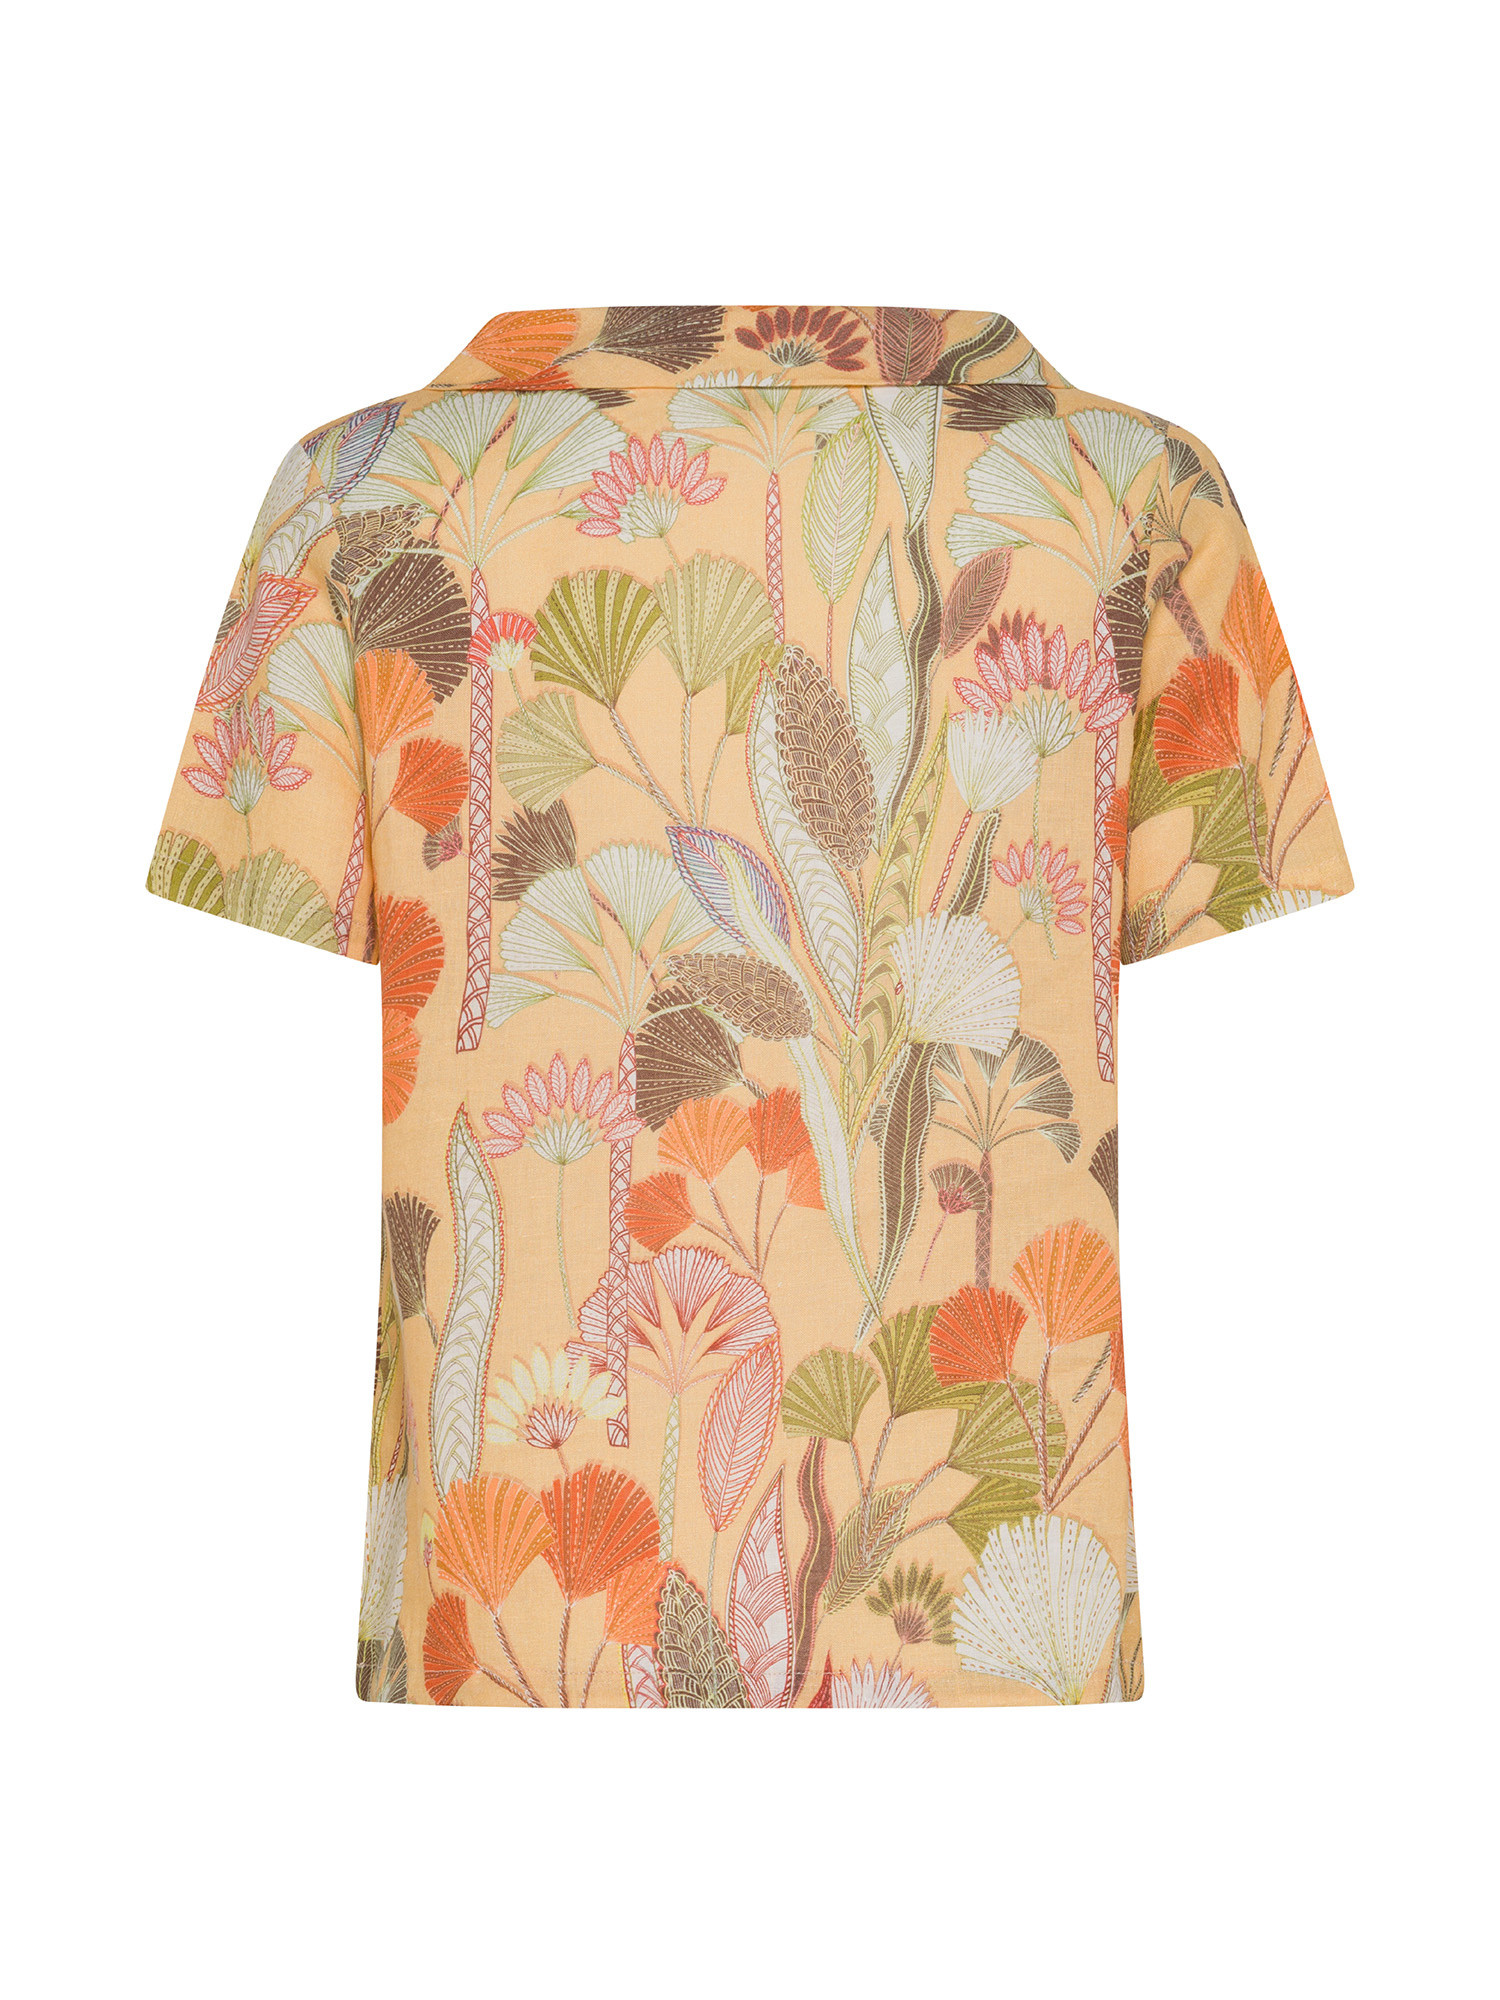 Koan - Pure linen blouse with print, Light Orange, large image number 1